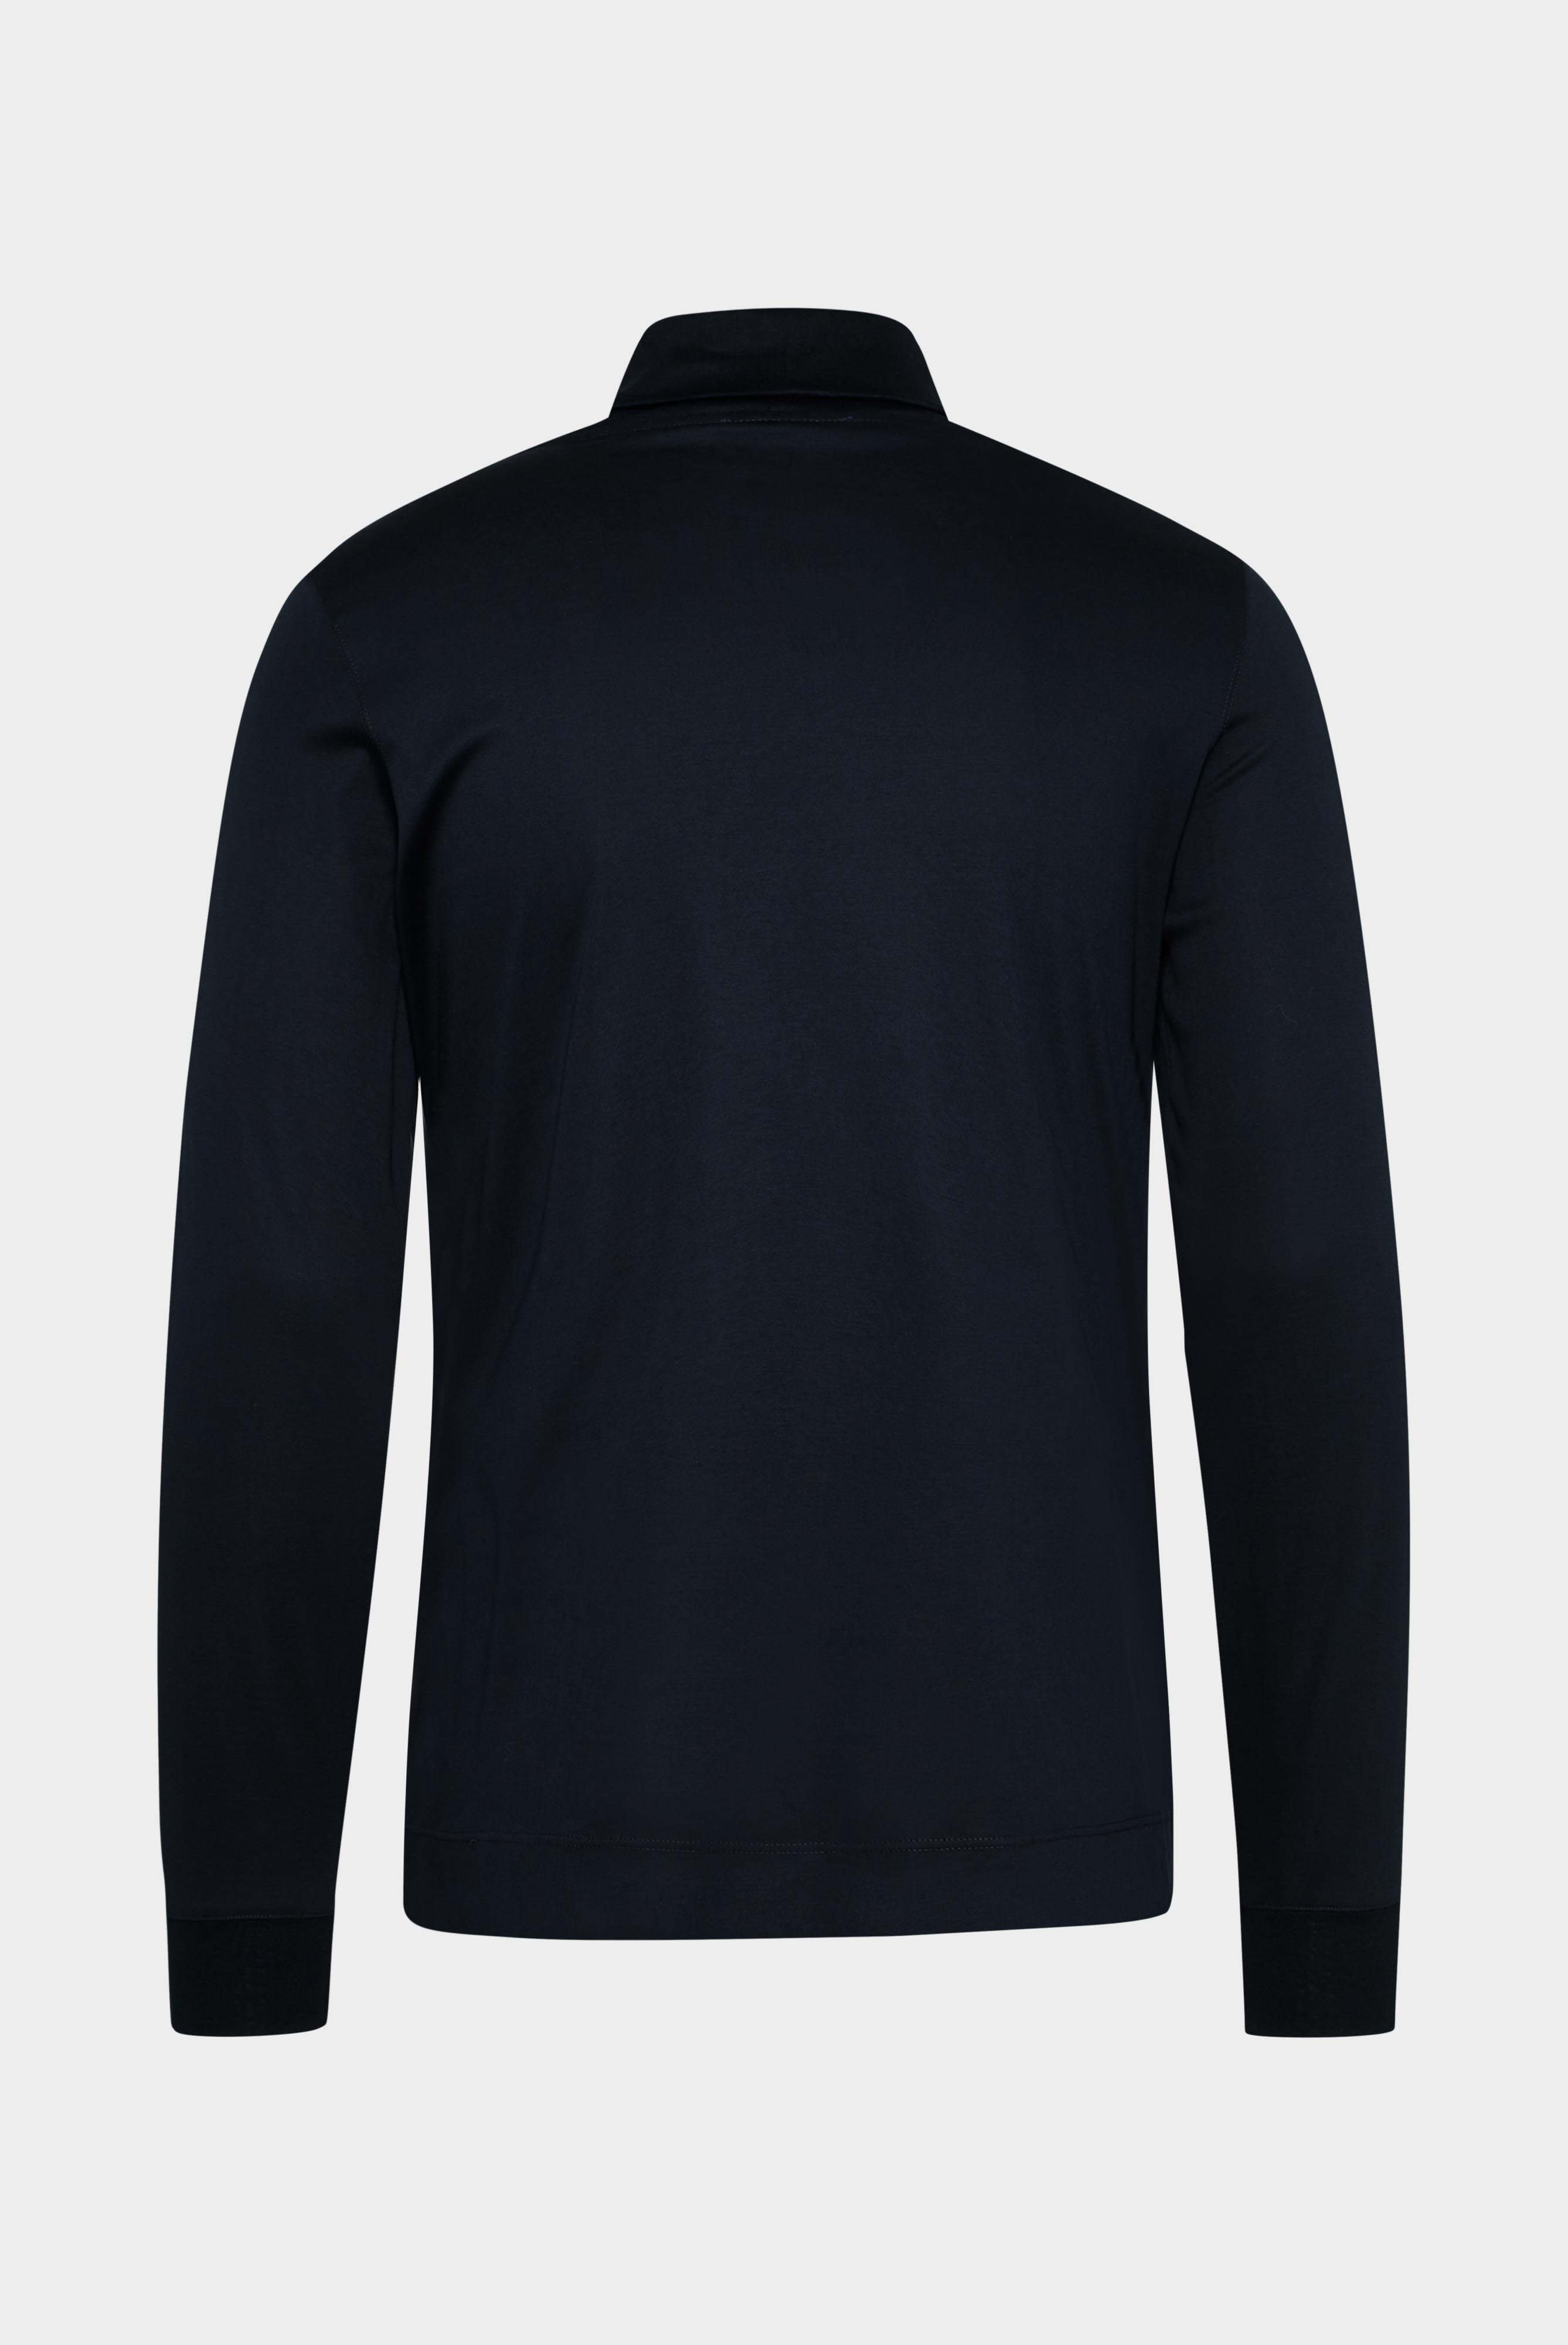 T-Shirts+Rollkragenshirt aus Jersey+20.1719.UX.180031.790.S